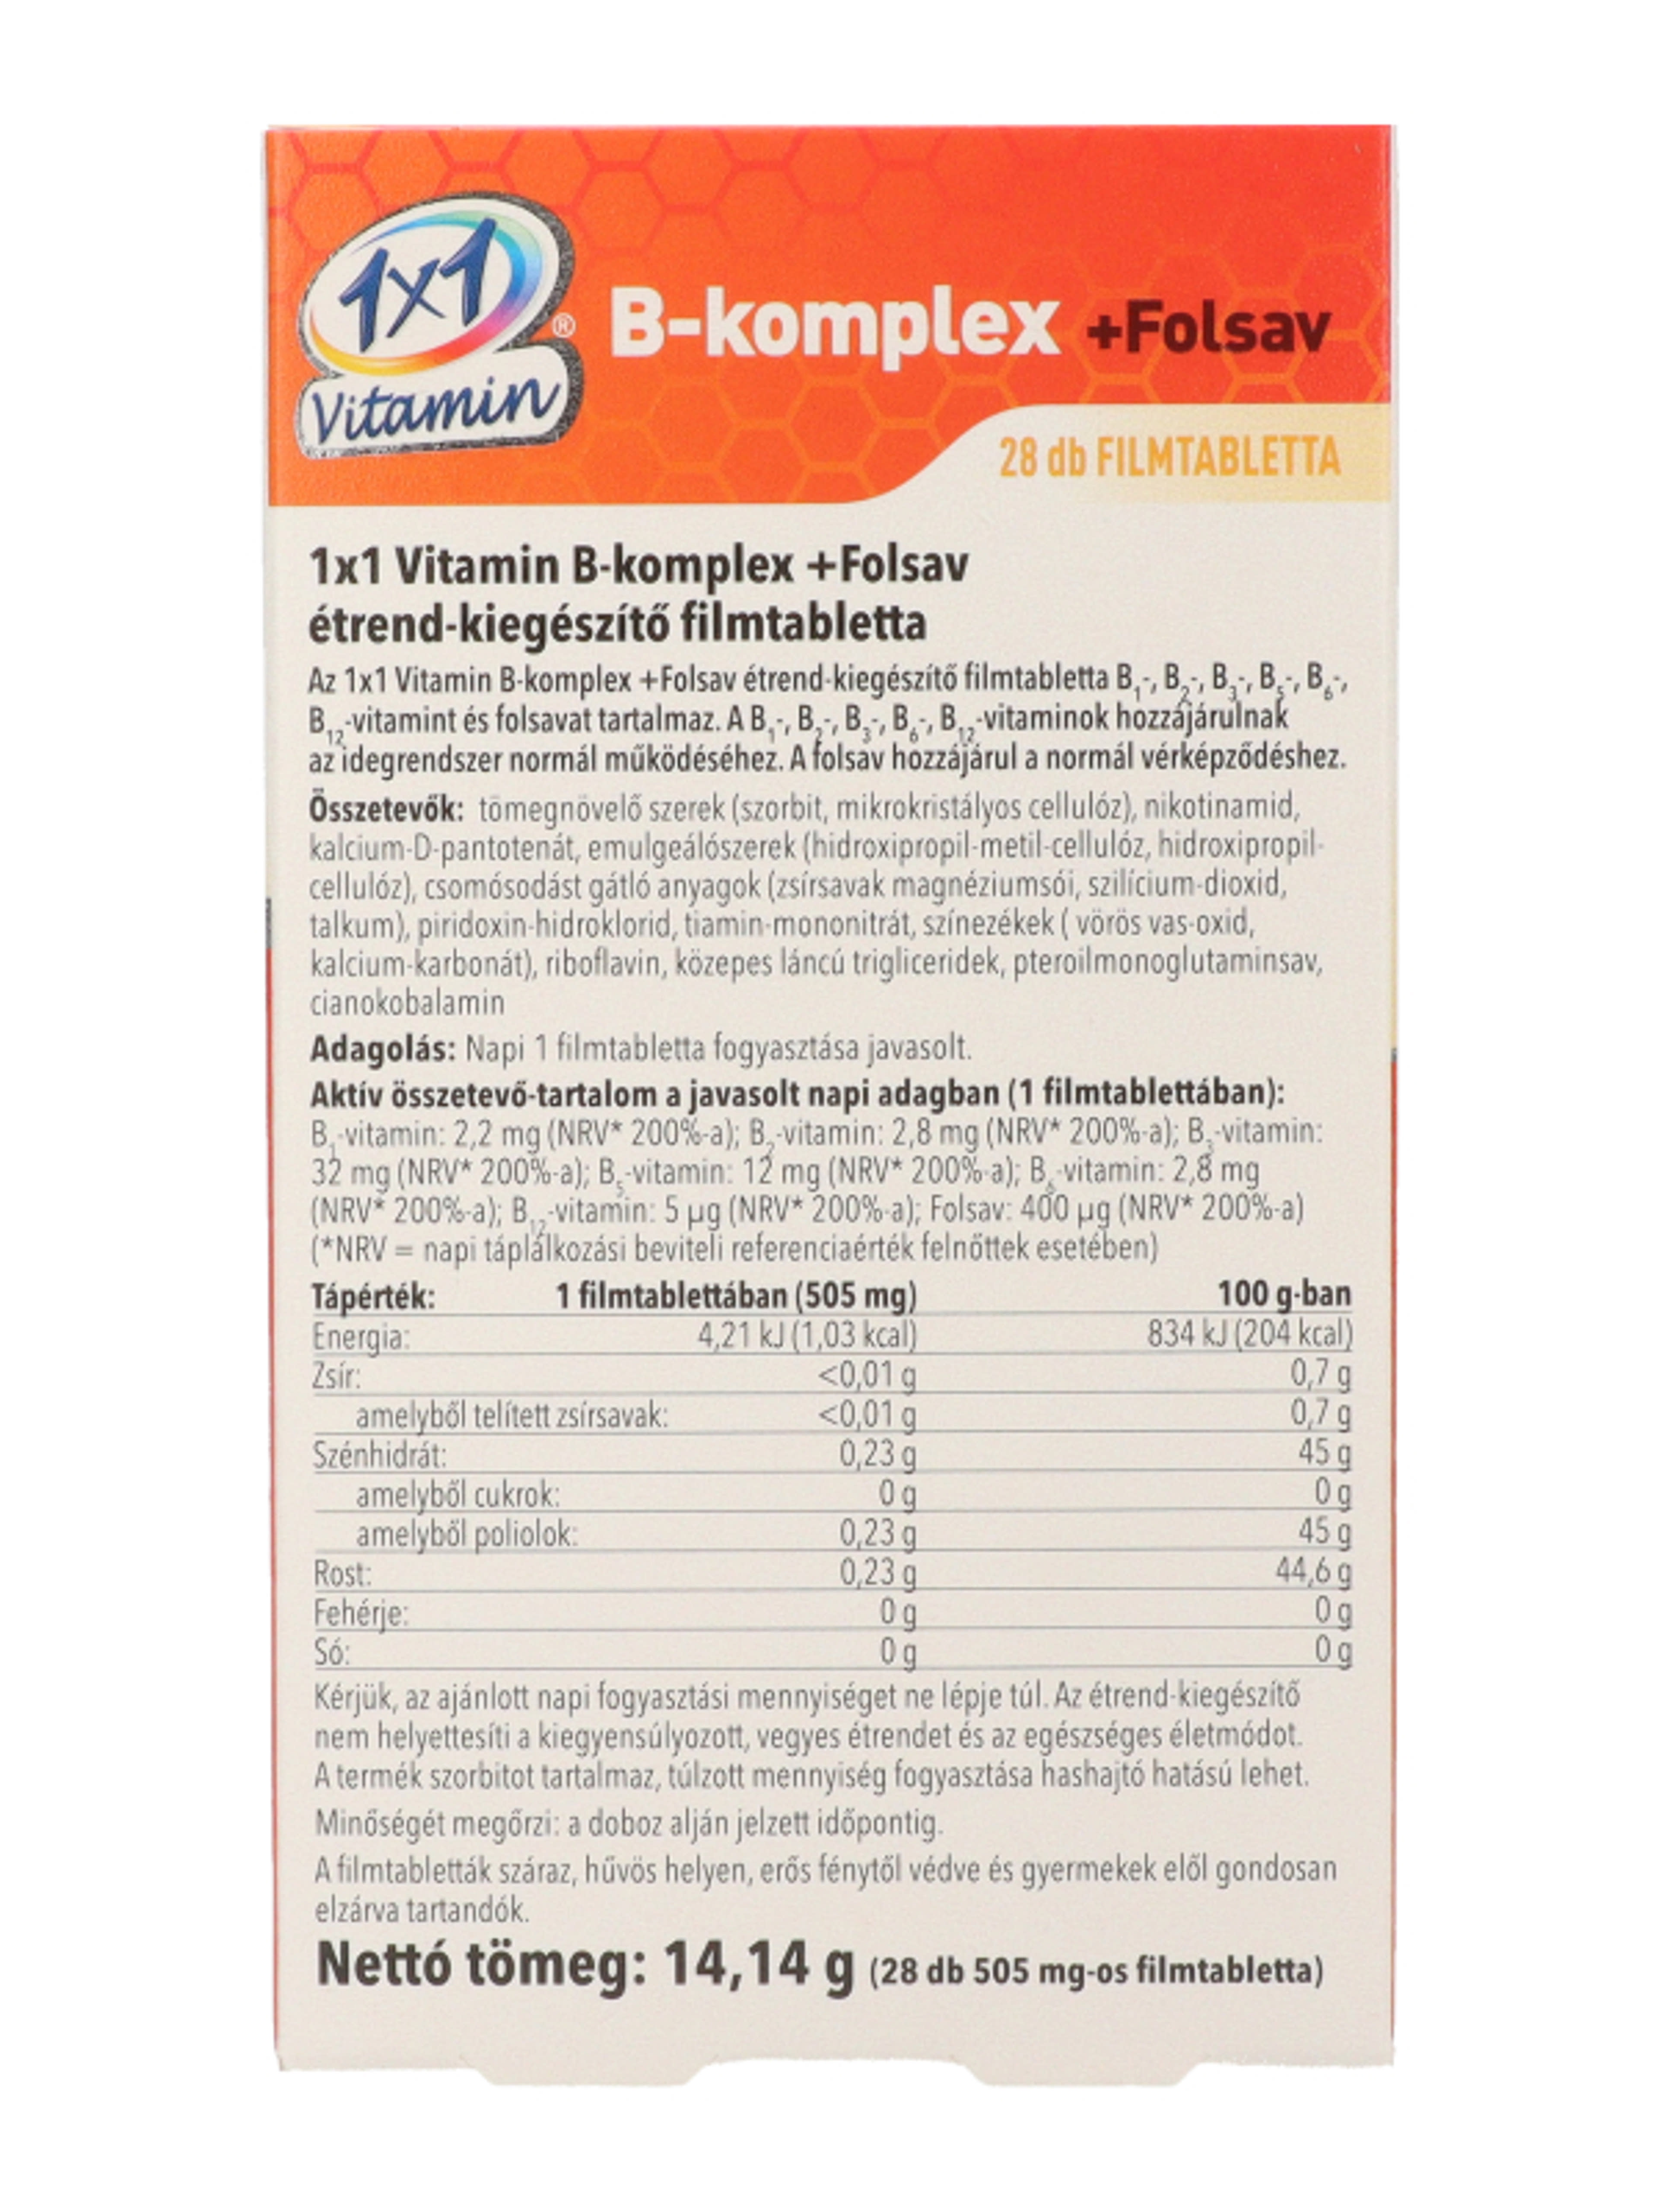 1×1 Vitamin B-komplex + folsav filmtabletta - 28 db-4